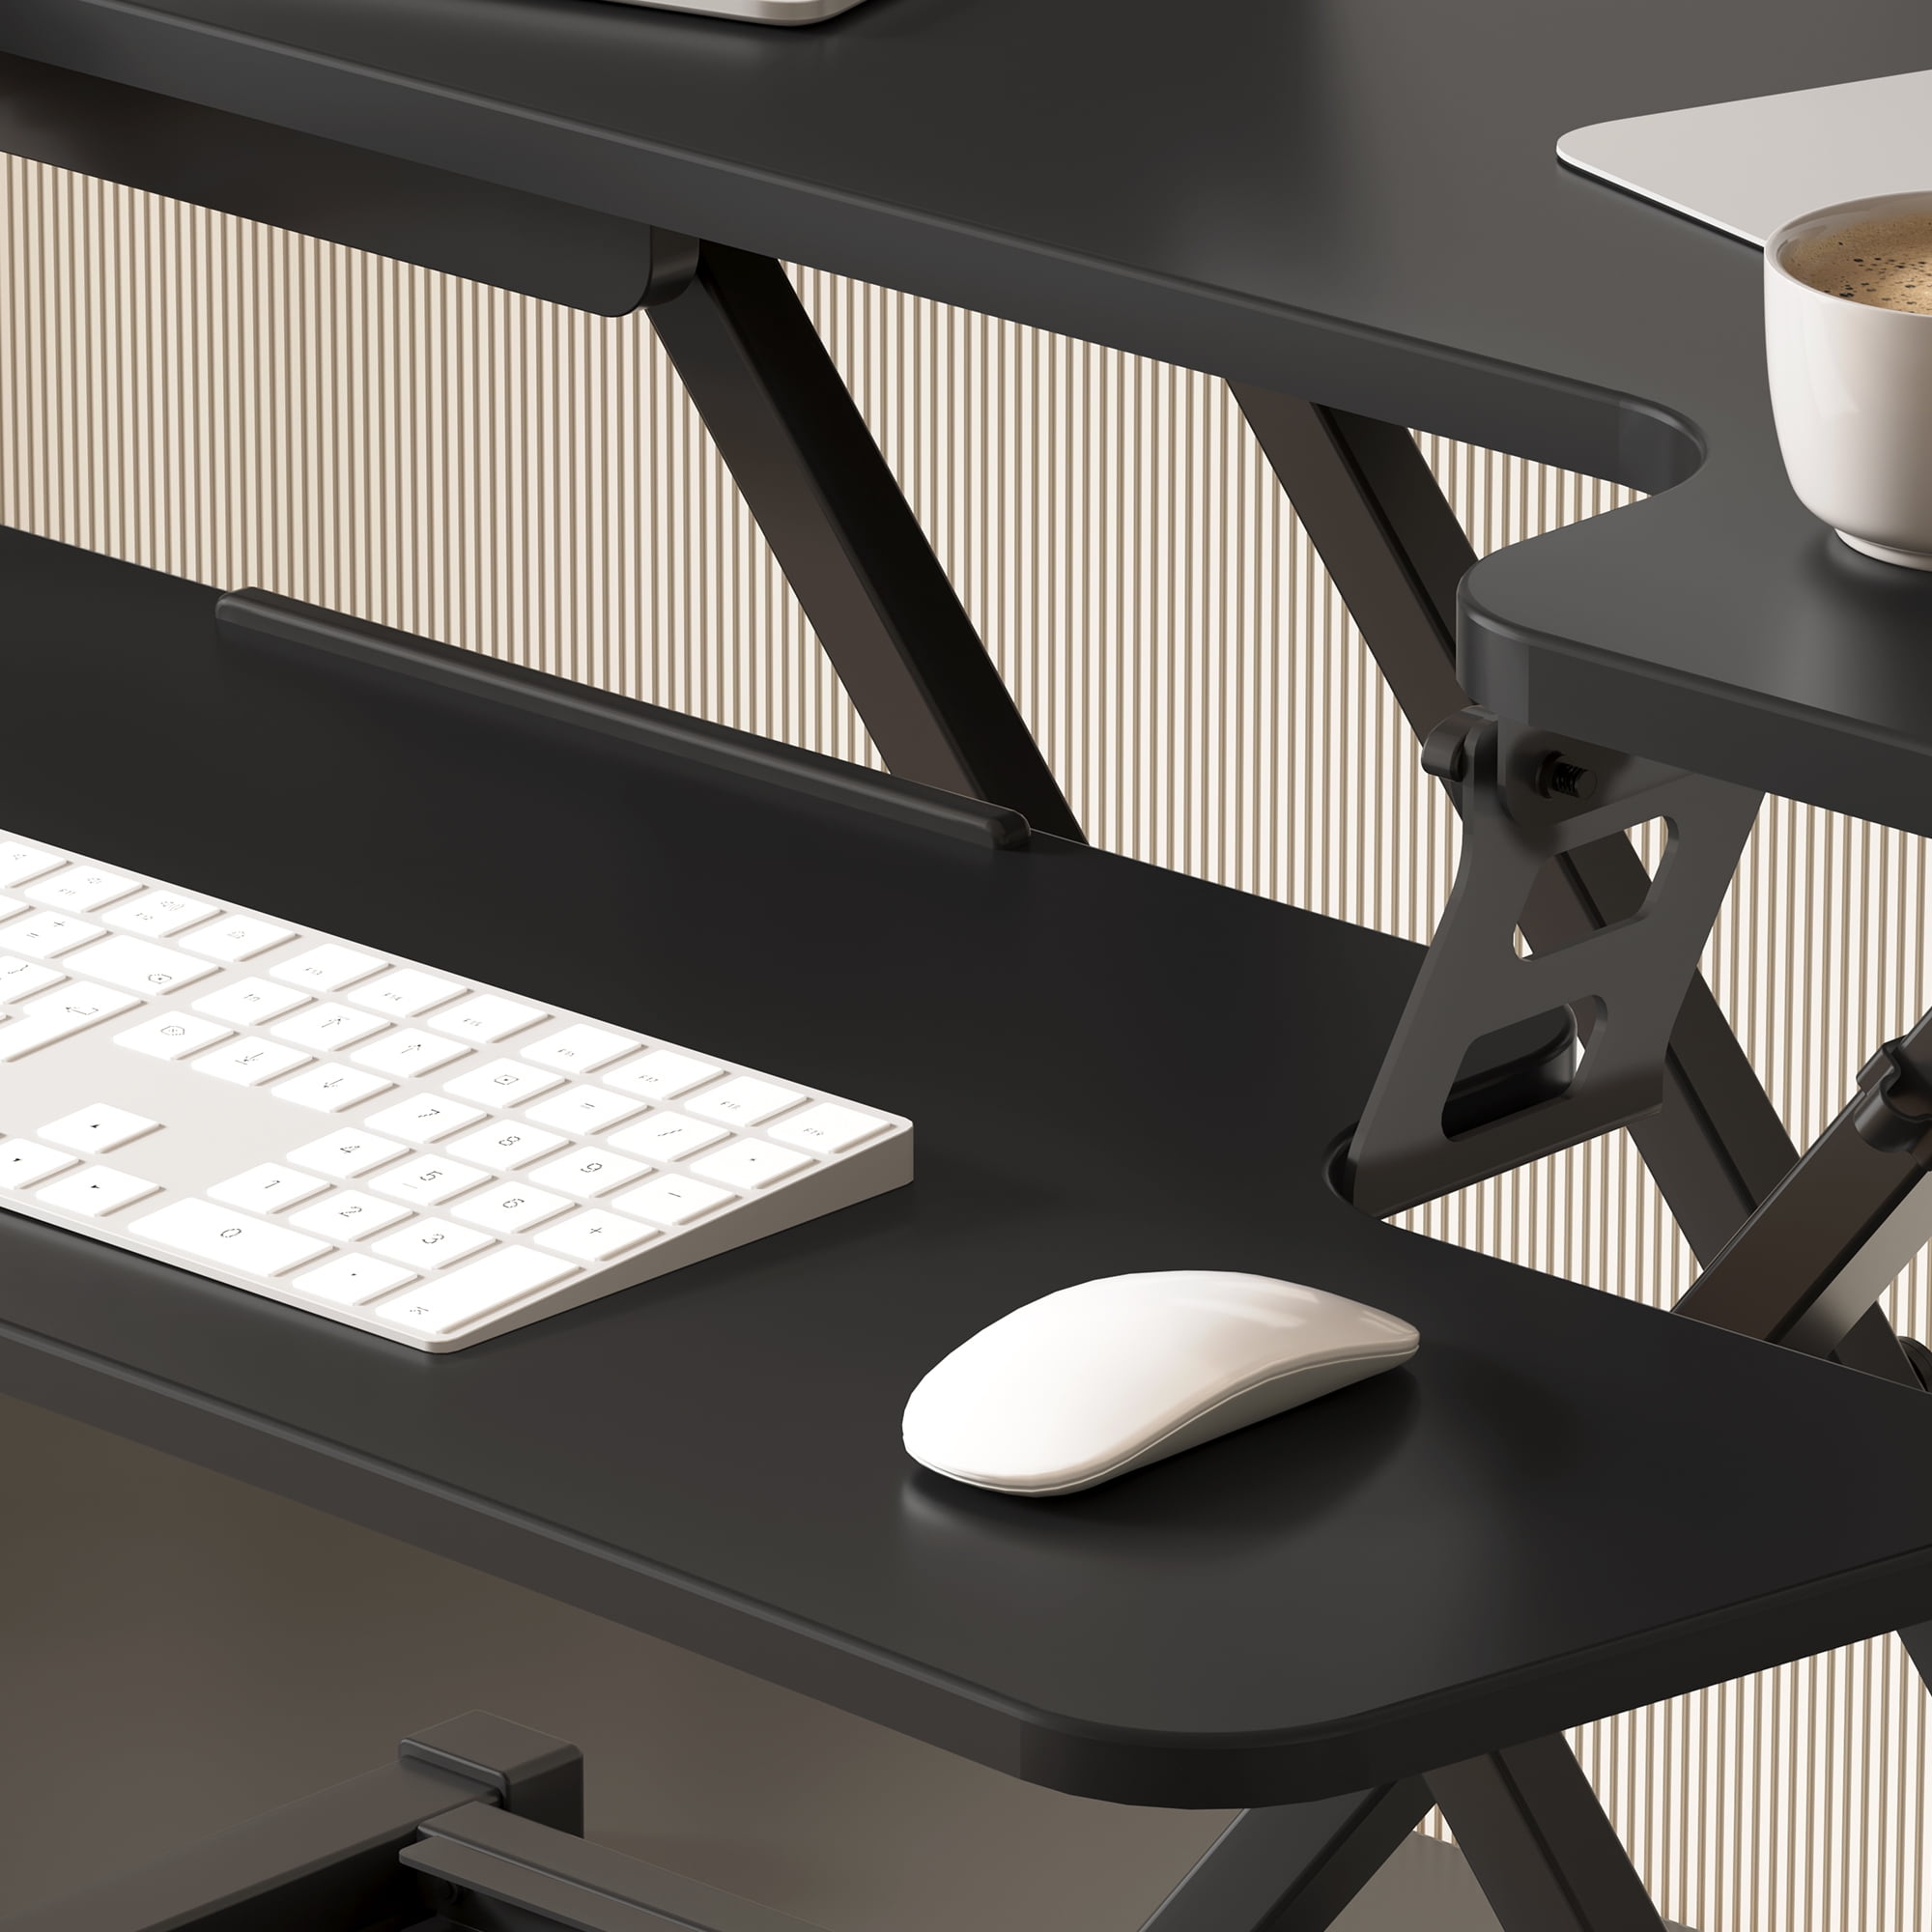 Flexispot 32Width Desk Converter with Removable Keyboard Tray